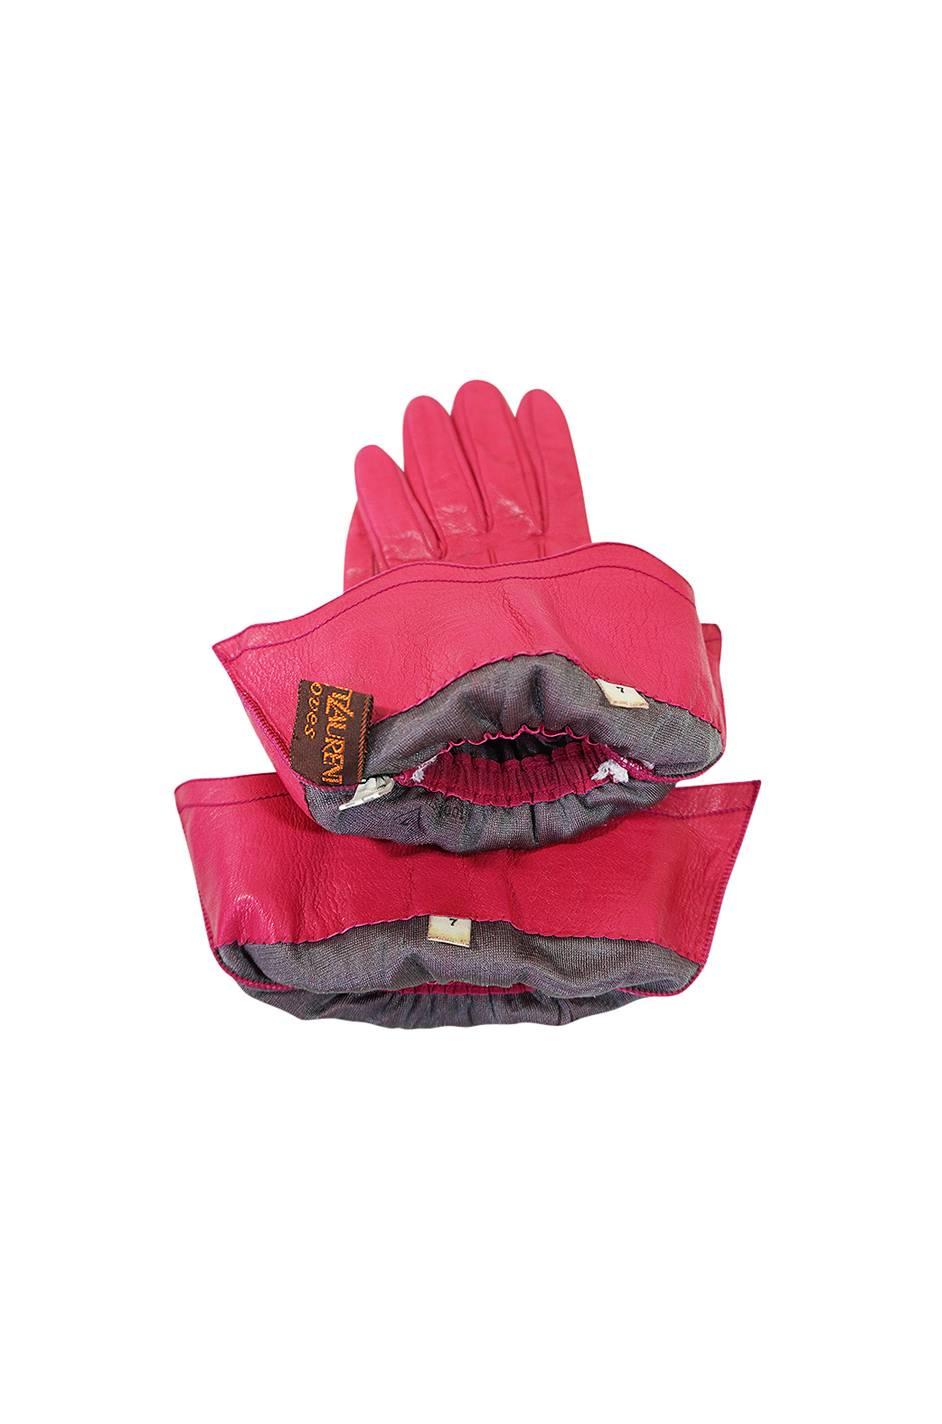 Women's Vintage Yves Saint Laurent Pink Leather Gauntlet Gloves 7